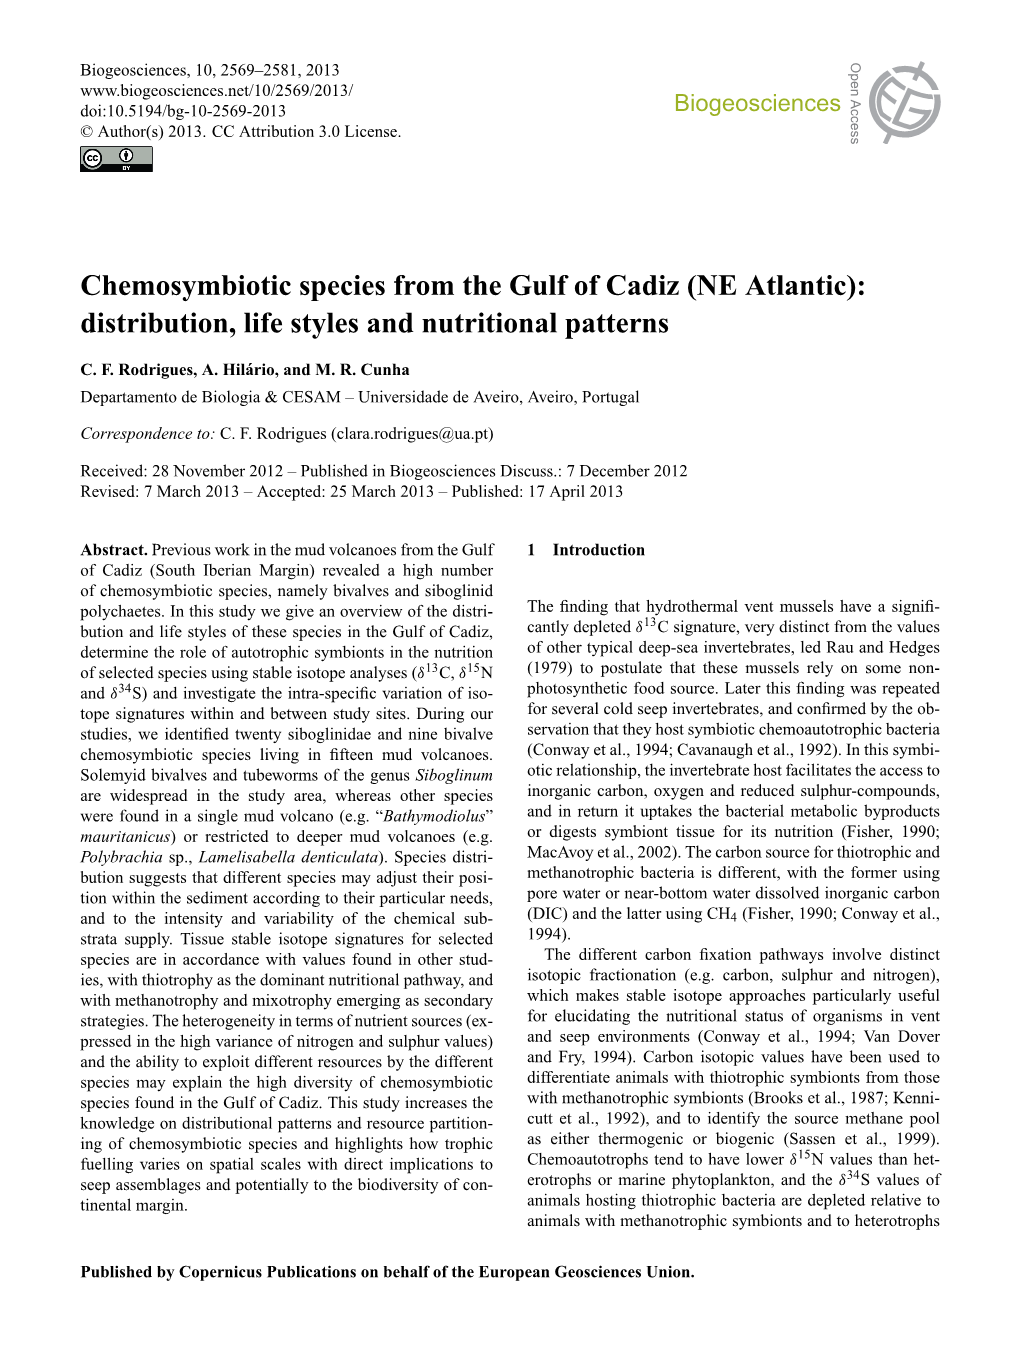 Chemosymbiotic Species from the Gulf of Cadiz (NE